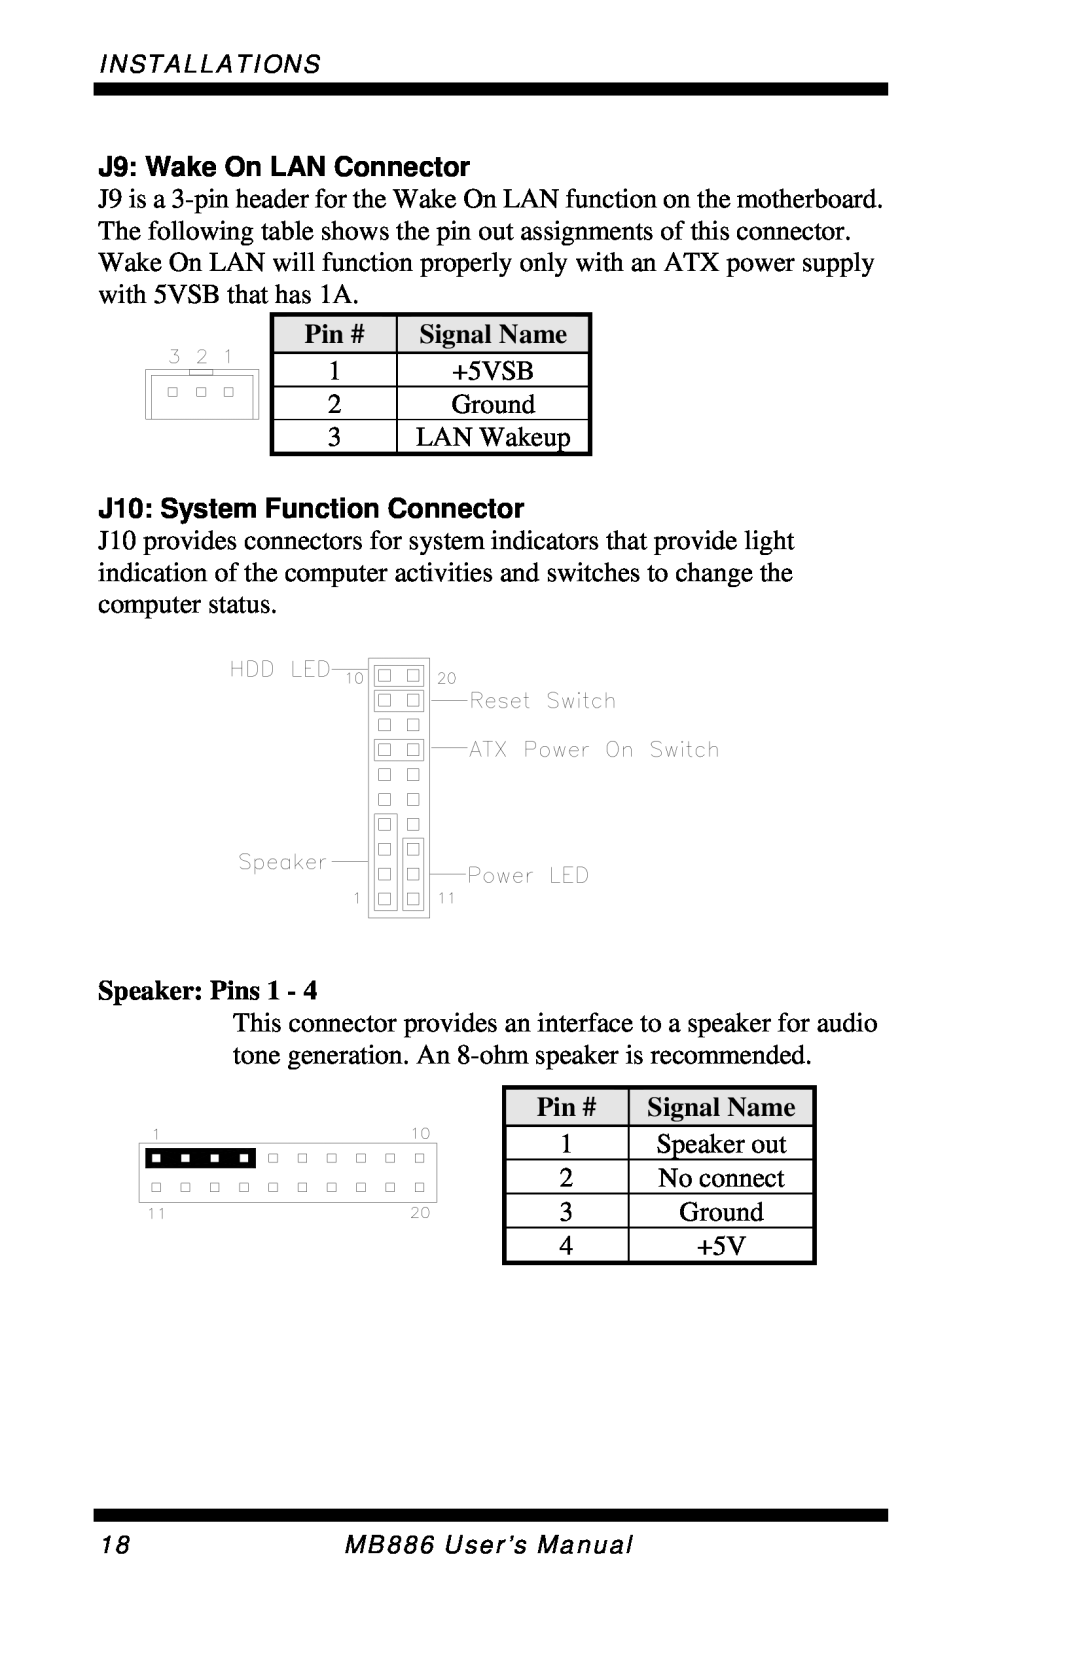 Intel MB886 user manual J9 Wake On LAN Connector, J10 System Function Connector, Speaker Pins, Pin # Signal Name 